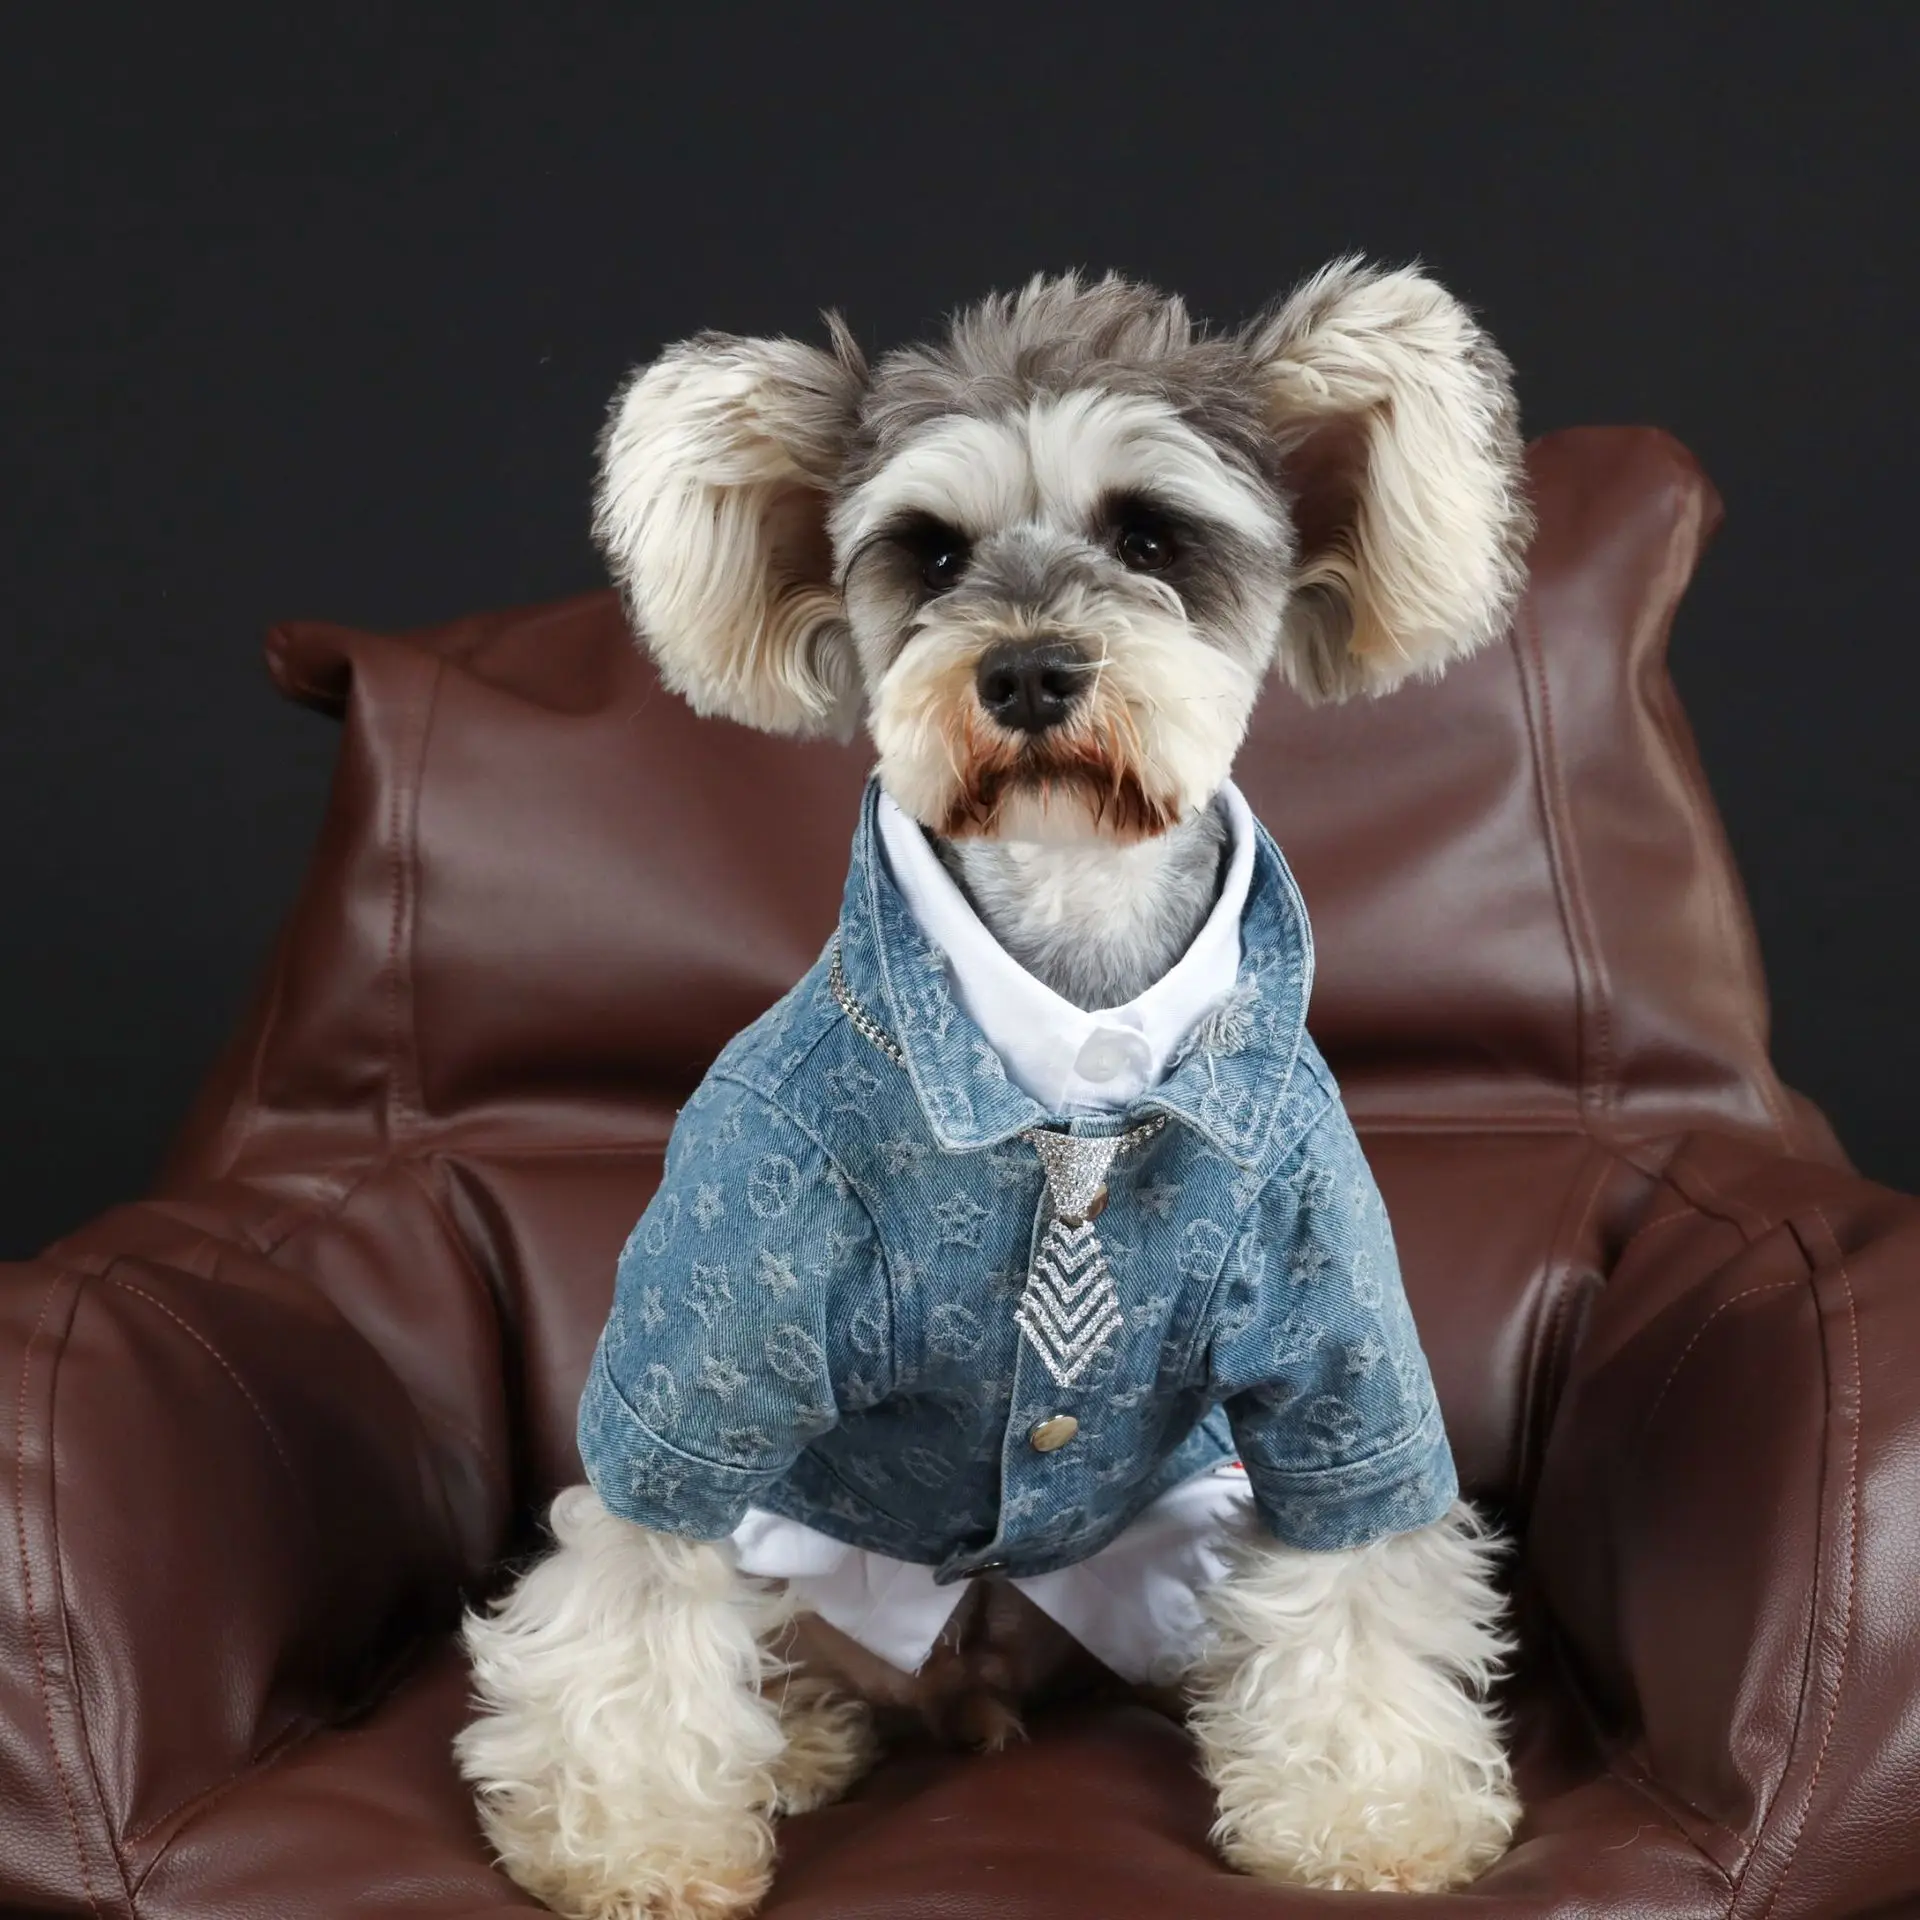 

Pet Winter Fall Summer Spring Clothes Jacket Denim shirt For Dog Teddy Schnauzer Pit Bull Shiba Inu Cat Bichon